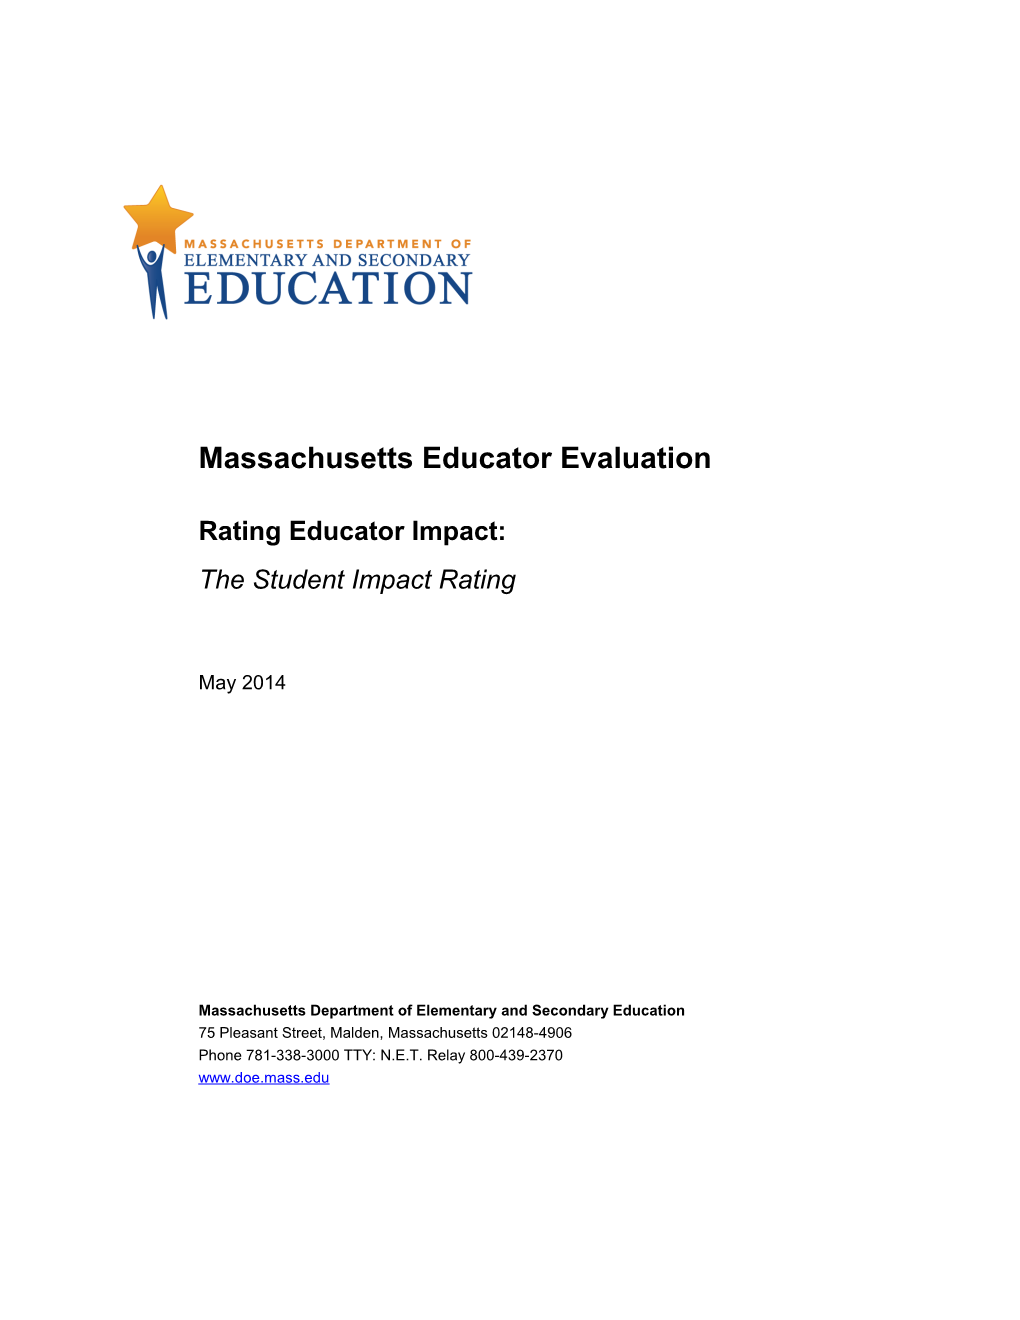 Rating Educator Impact - MA Educator Evaluation